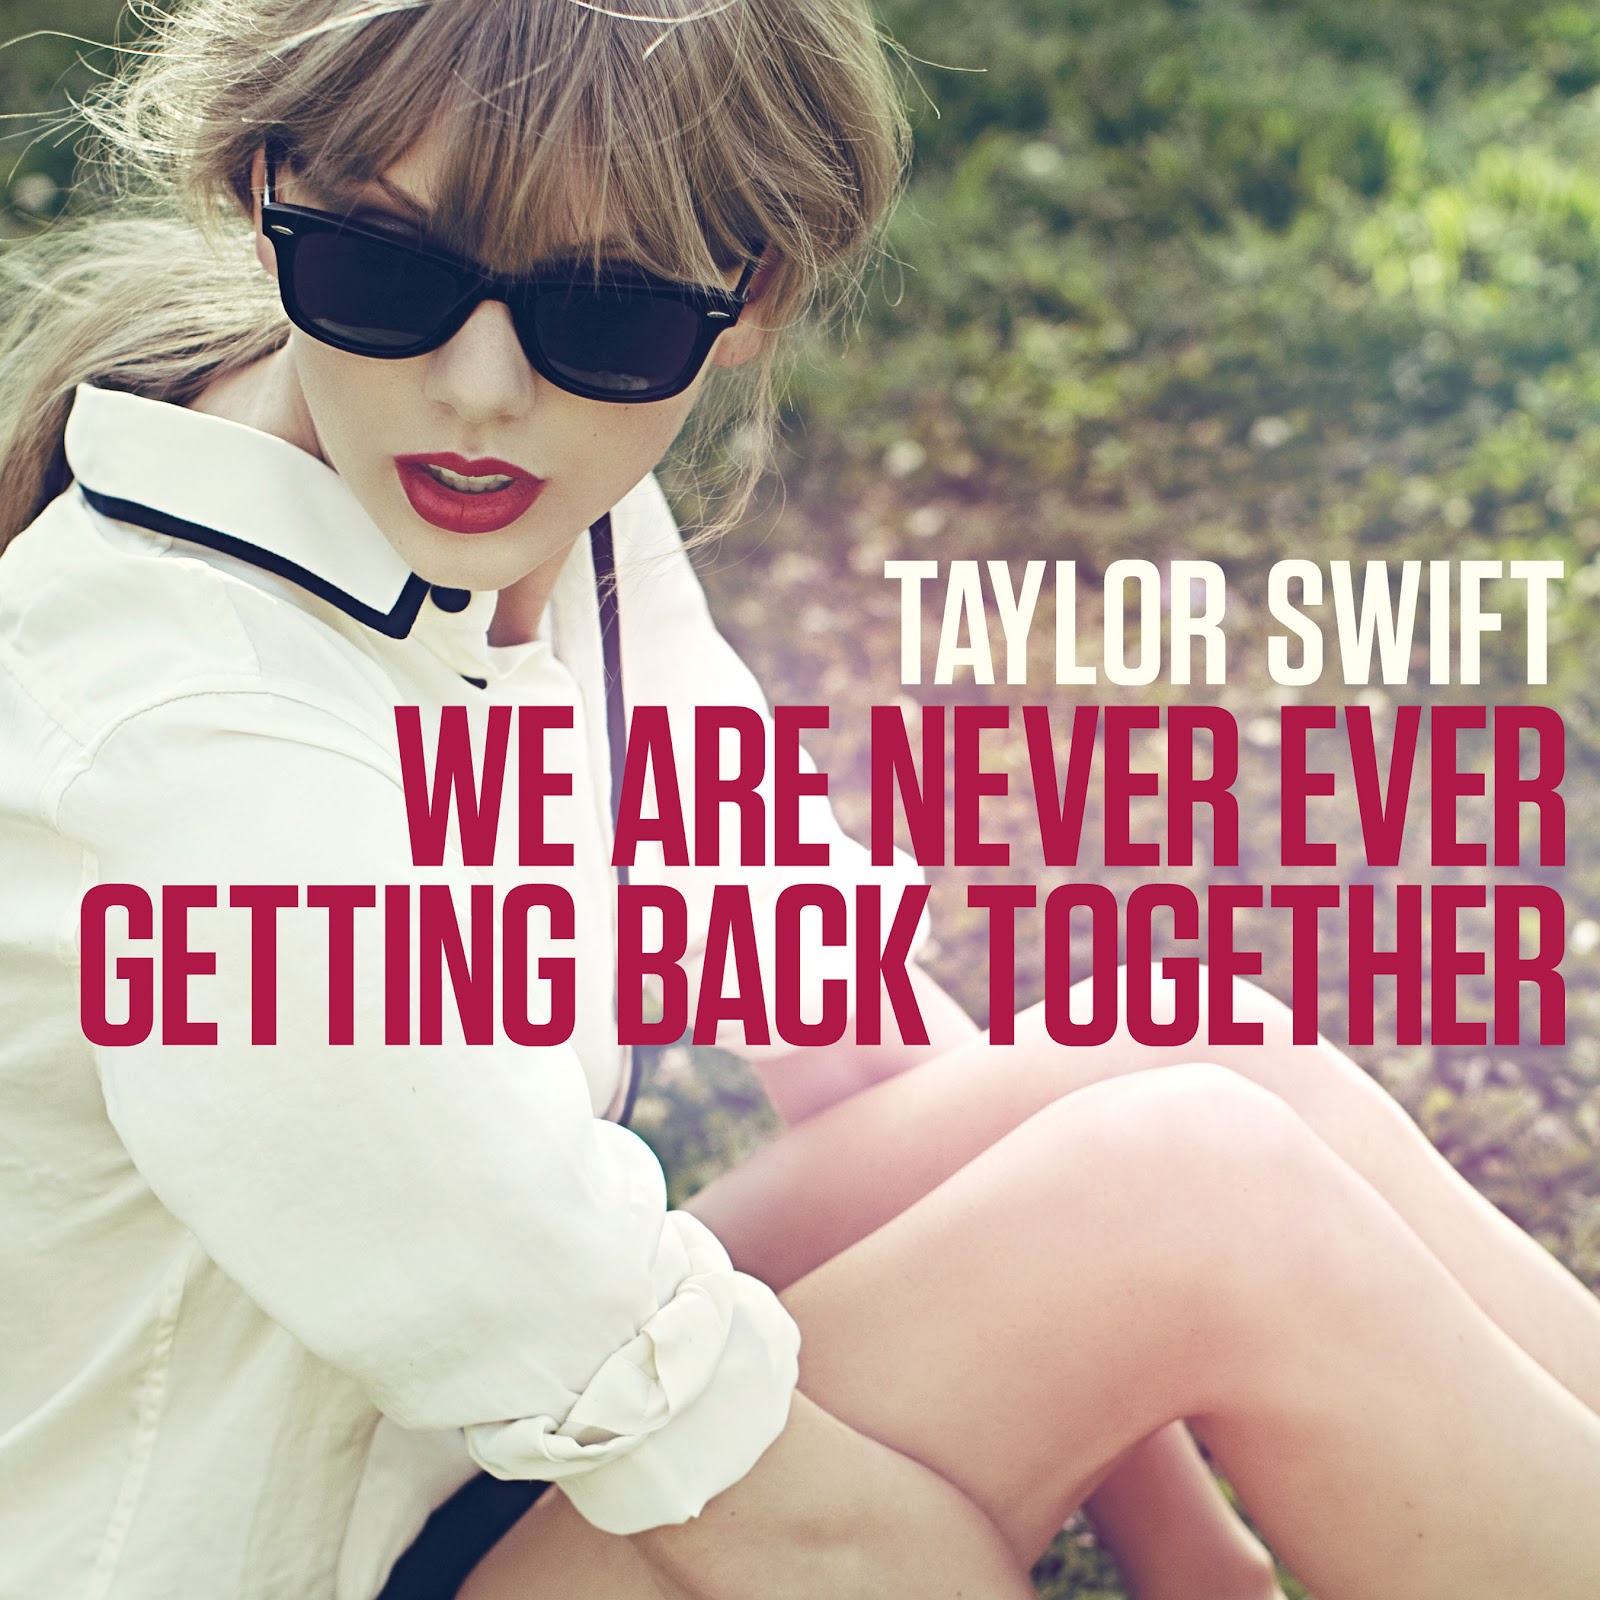 http://4.bp.blogspot.com/-ulNamz_7Ki0/UDa5ZKyP49I/AAAAAAAAB3M/QtE5EDgABBM/s1600/We+Are+Never+Ever+Getting+Back+Together+-+Taylor+Swift.jpg